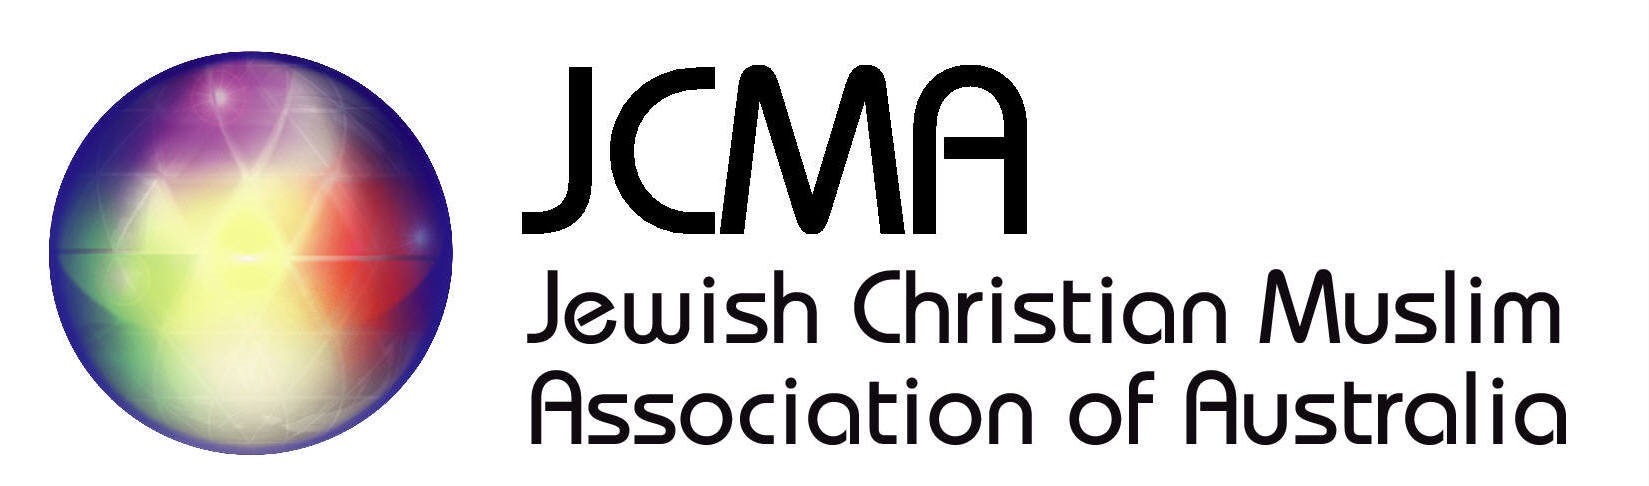 JCMA_Logo_left